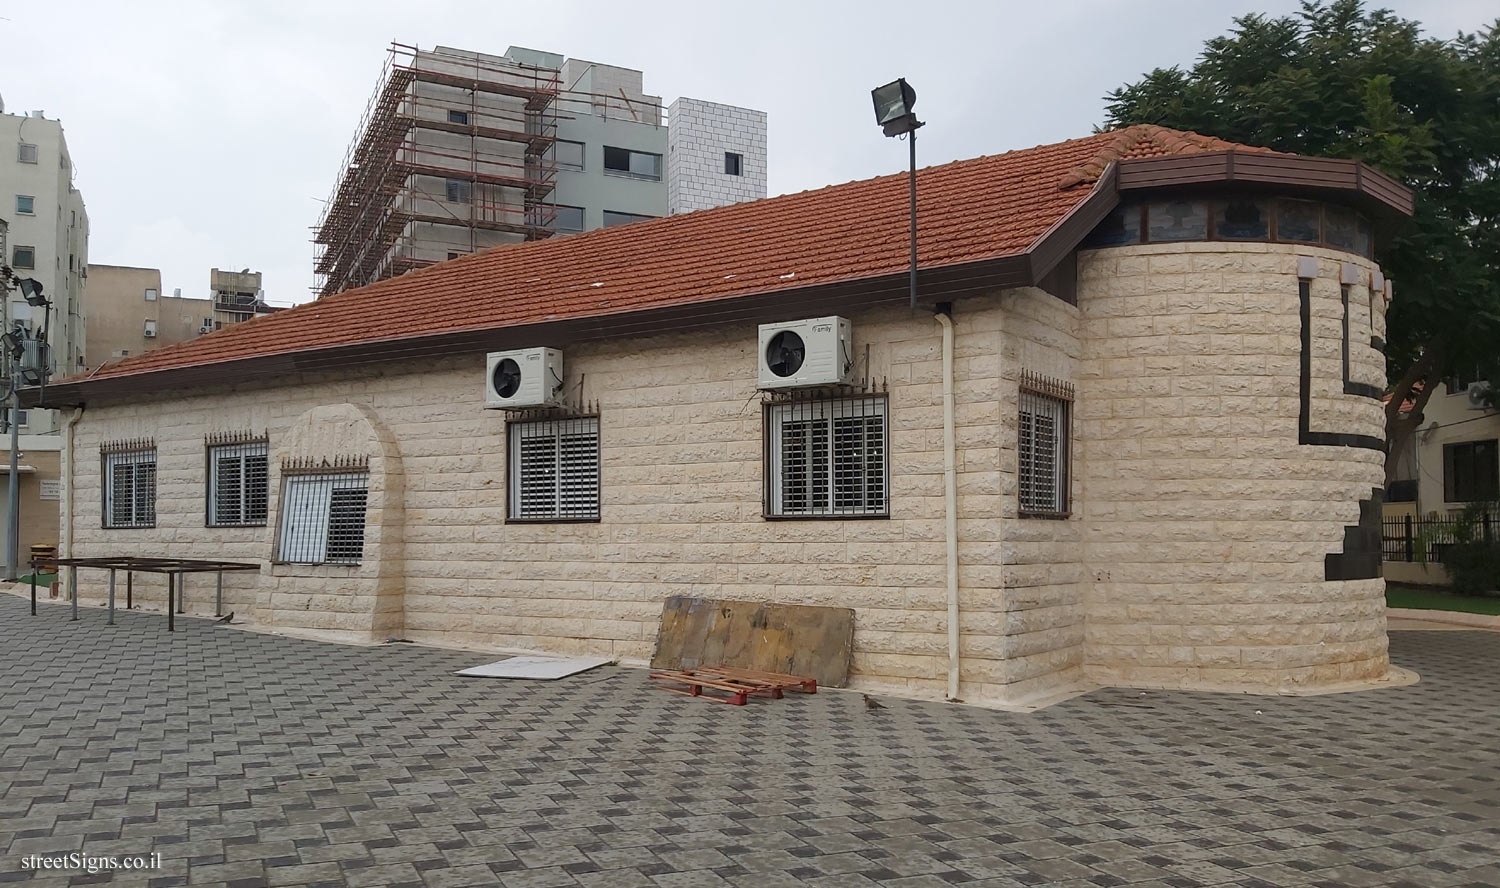 Holon - Heritage Sites in Israel - The Samaritan neighborhood - The Great Synagogue - Ben Amram St 14, Holon, Israel